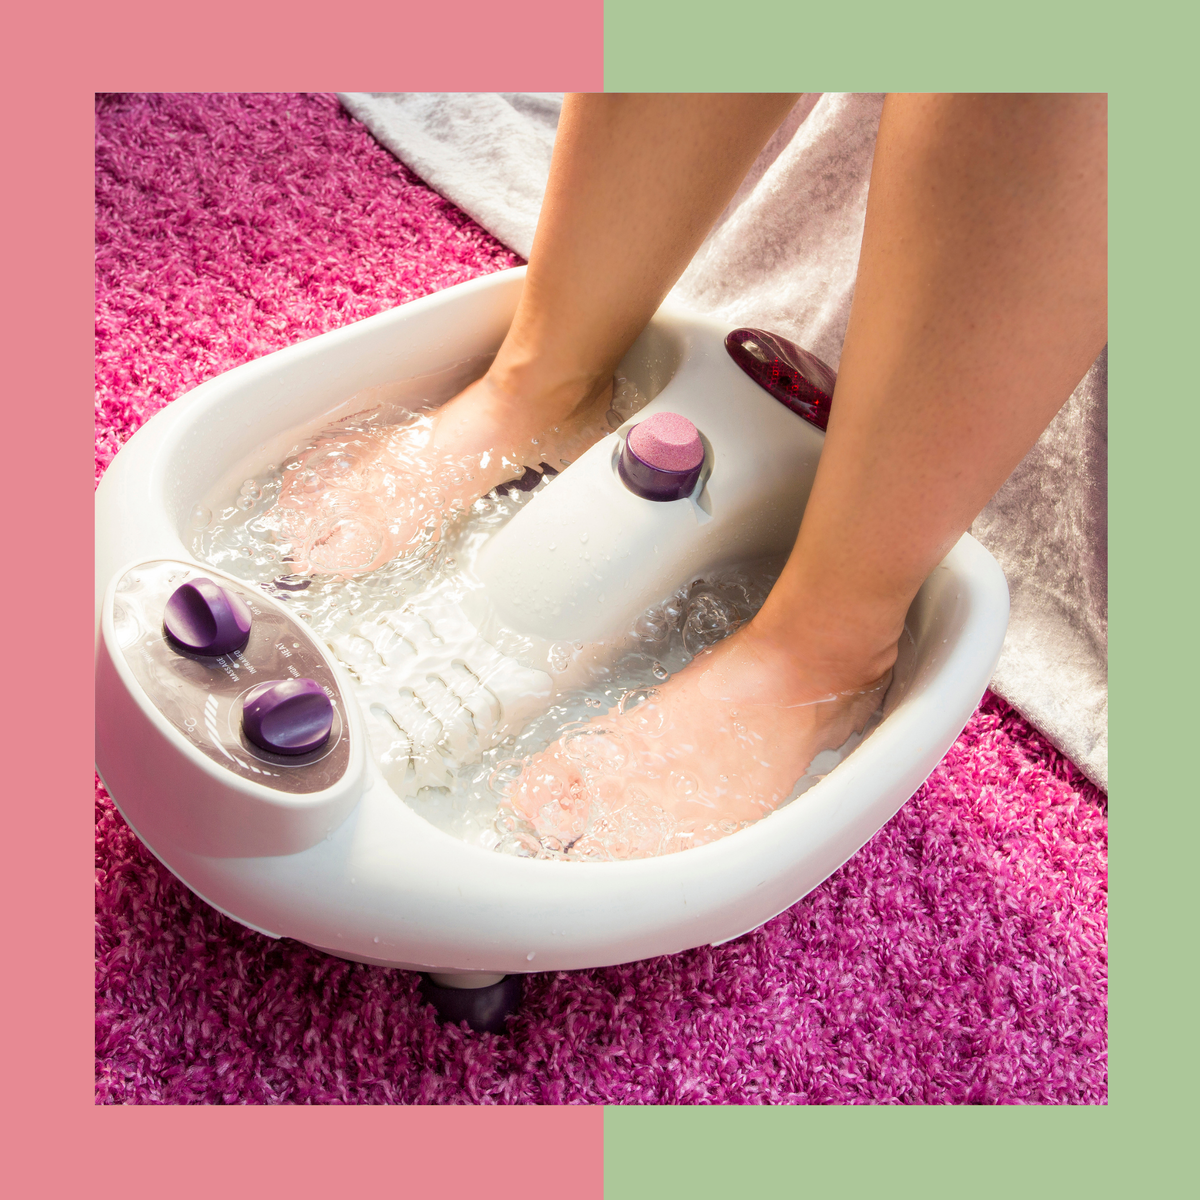 Ванночка для дома. Гидромассажная ванночка Nozomi MF-104. BABYLISS body benefits гидромассажная ванночка. Педикюрная ванна для ног. Ванночка для ног спа.